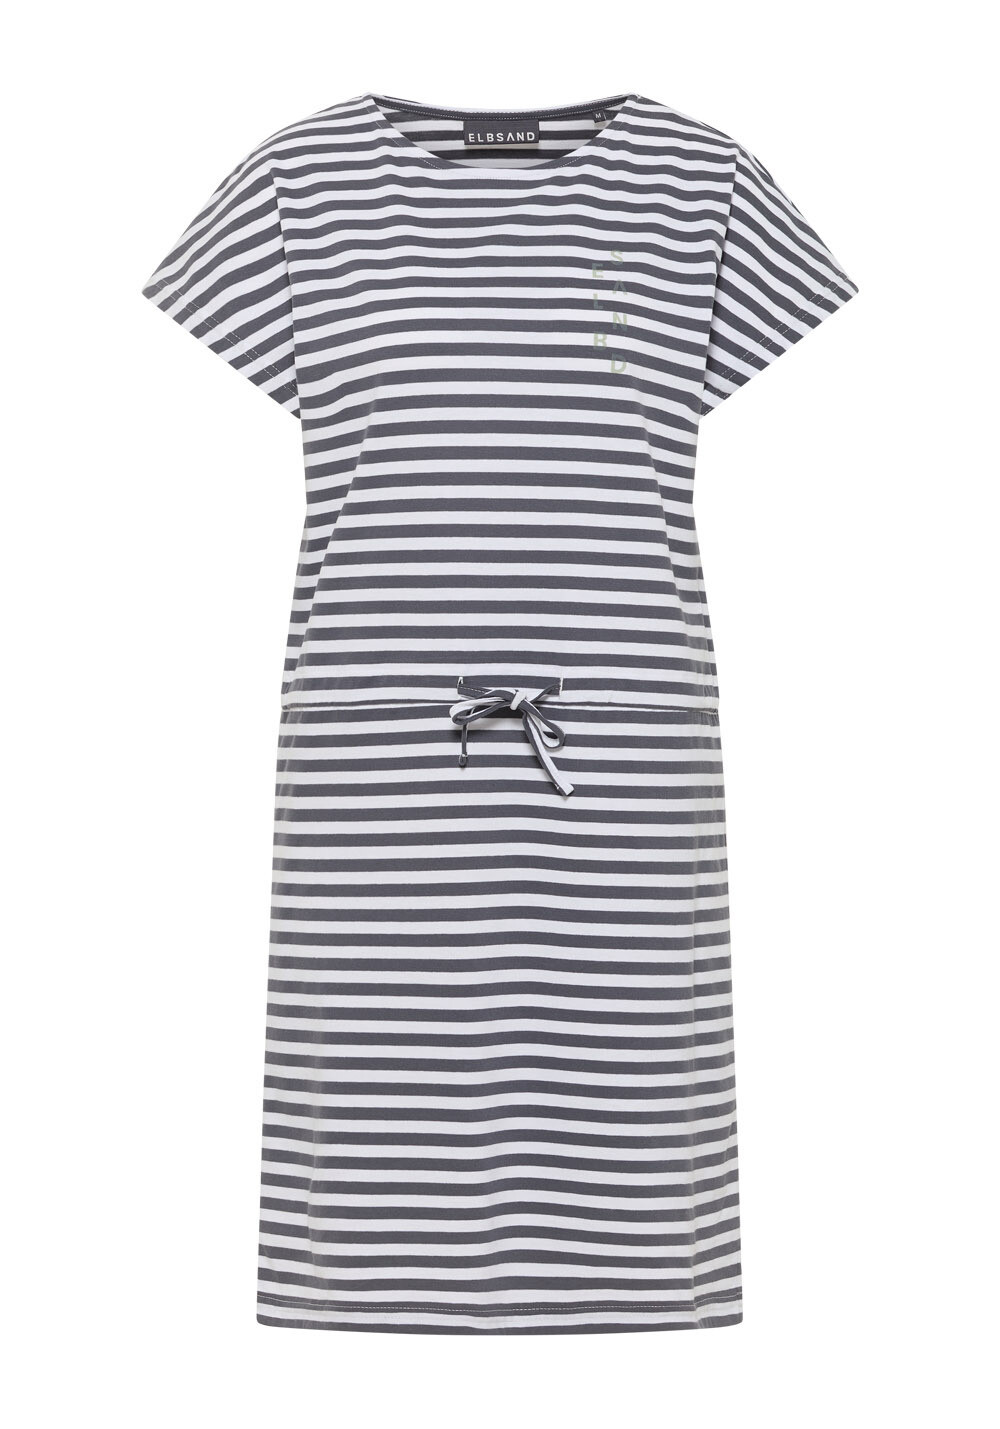 Elbsand Sellvie Shirtdress charcoal+bright white stripe, Größe: S